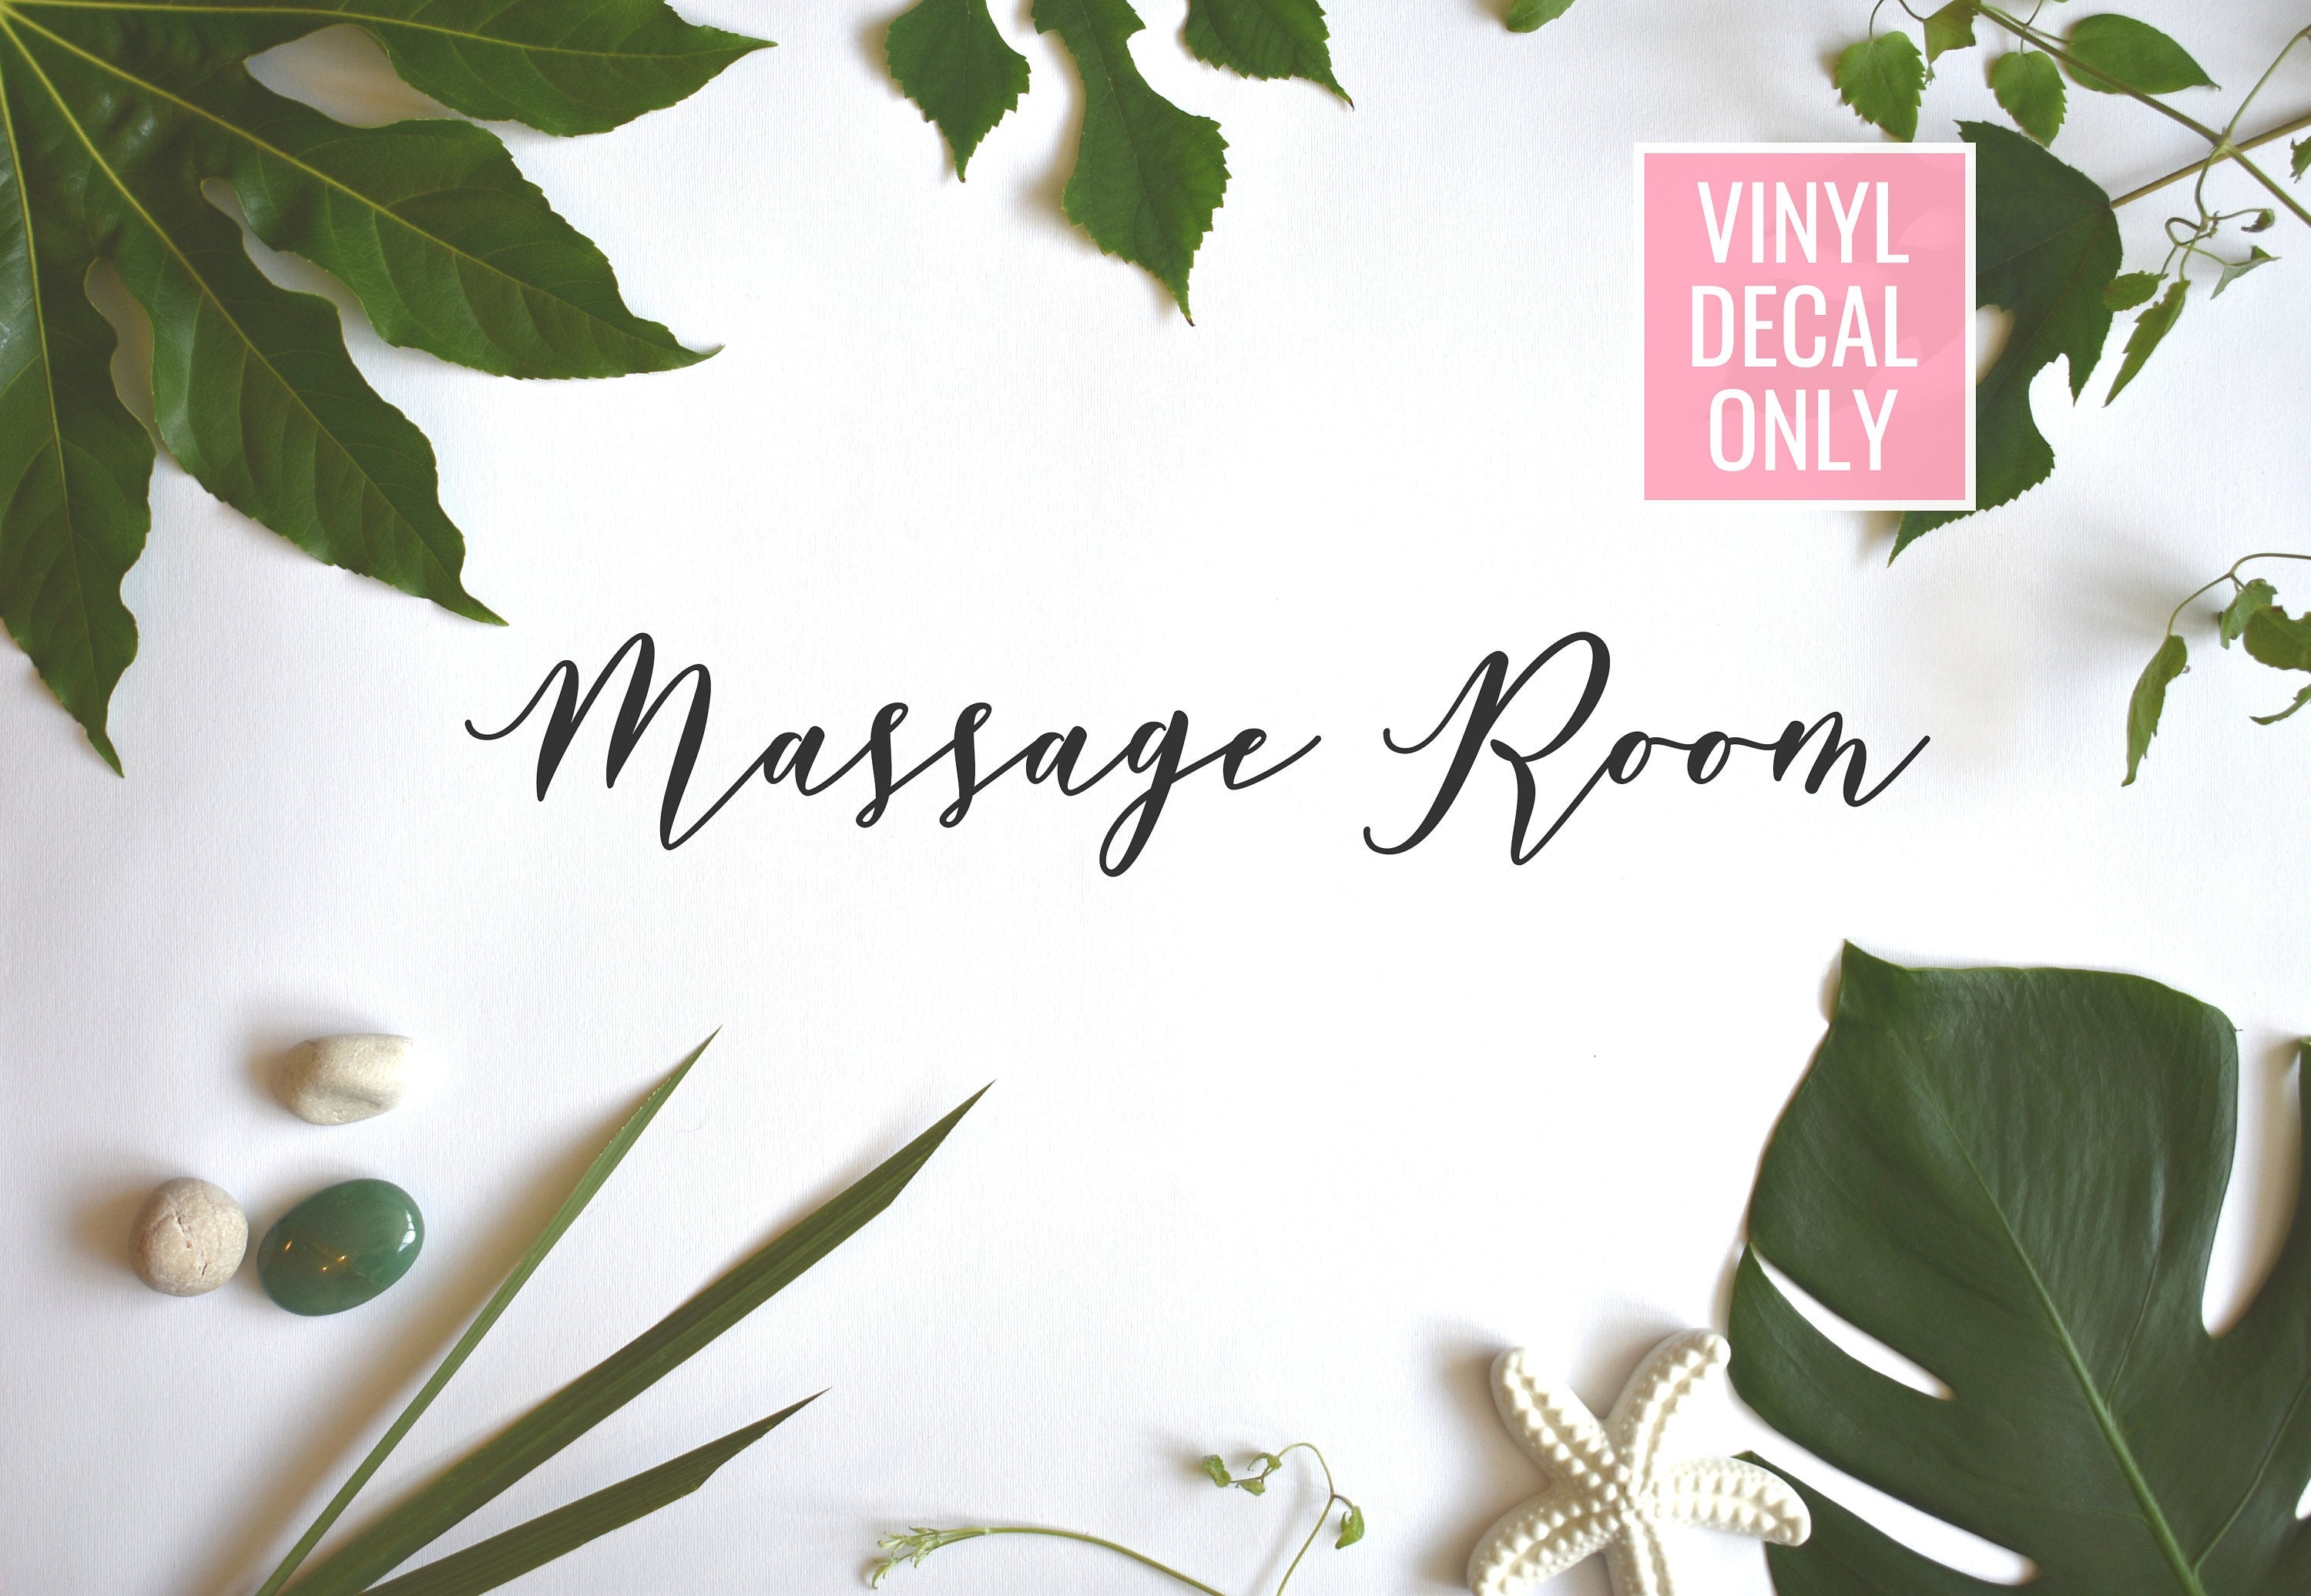 Massage Room Decal - Vinyl Decals for Hotels, Shops, Spa, Hair Salon, Barber Shop, Restaurants, Businesses, and More!